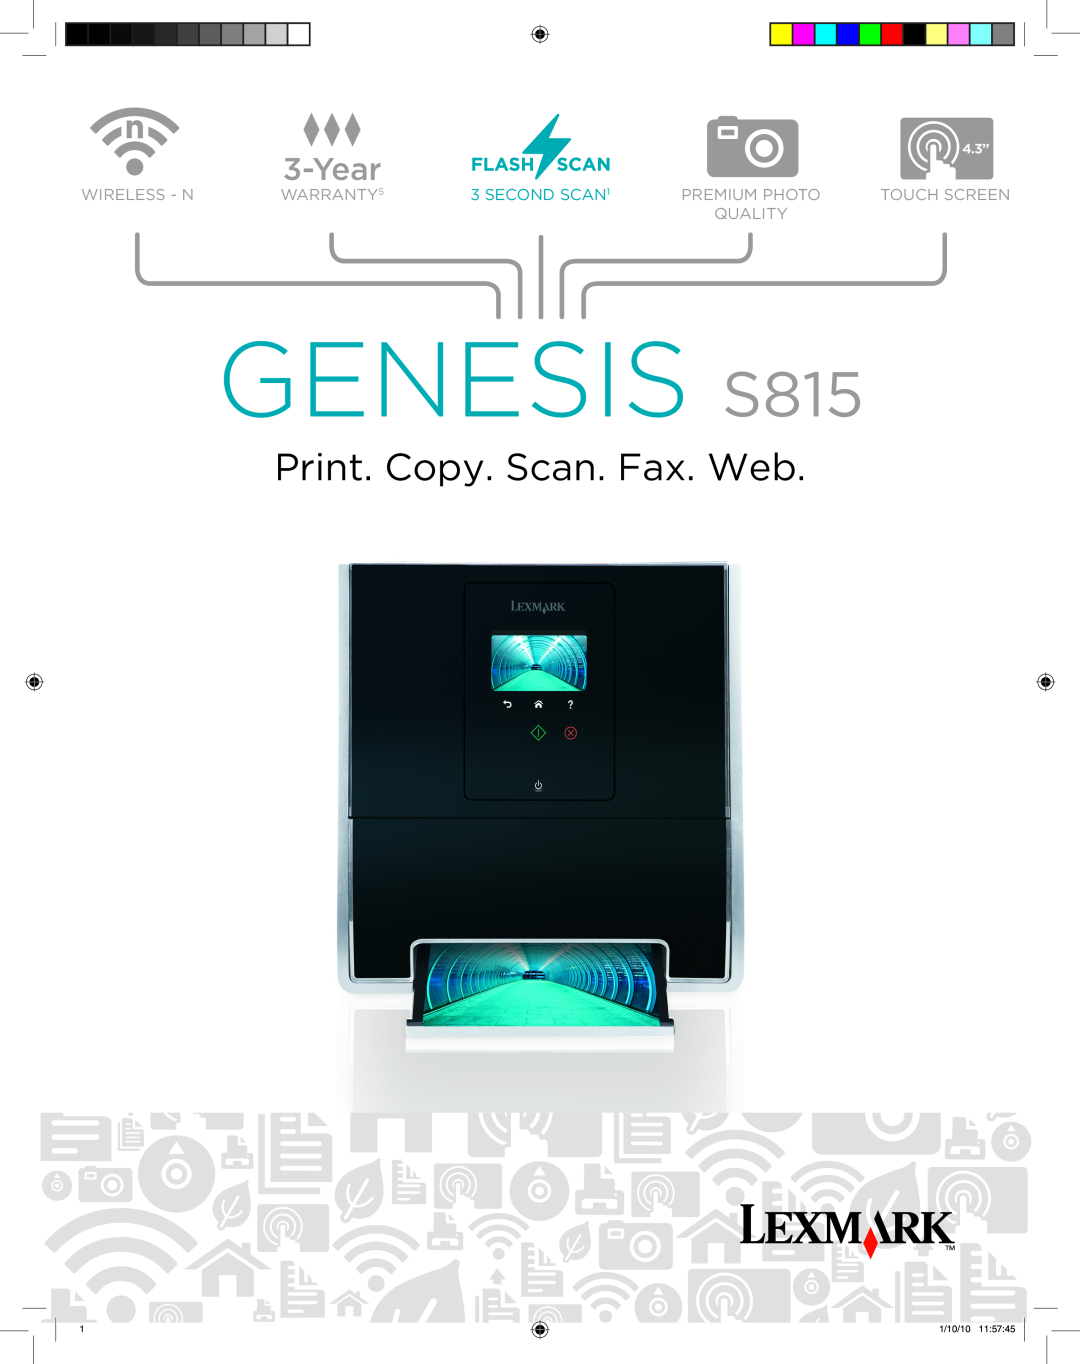 Lexmark warranty GENESIS S815, Print. Copy. Scan. Fax. Web, Year, Wireless - N, WARRANTY5, SECOND SCAN1, Premium Photo 